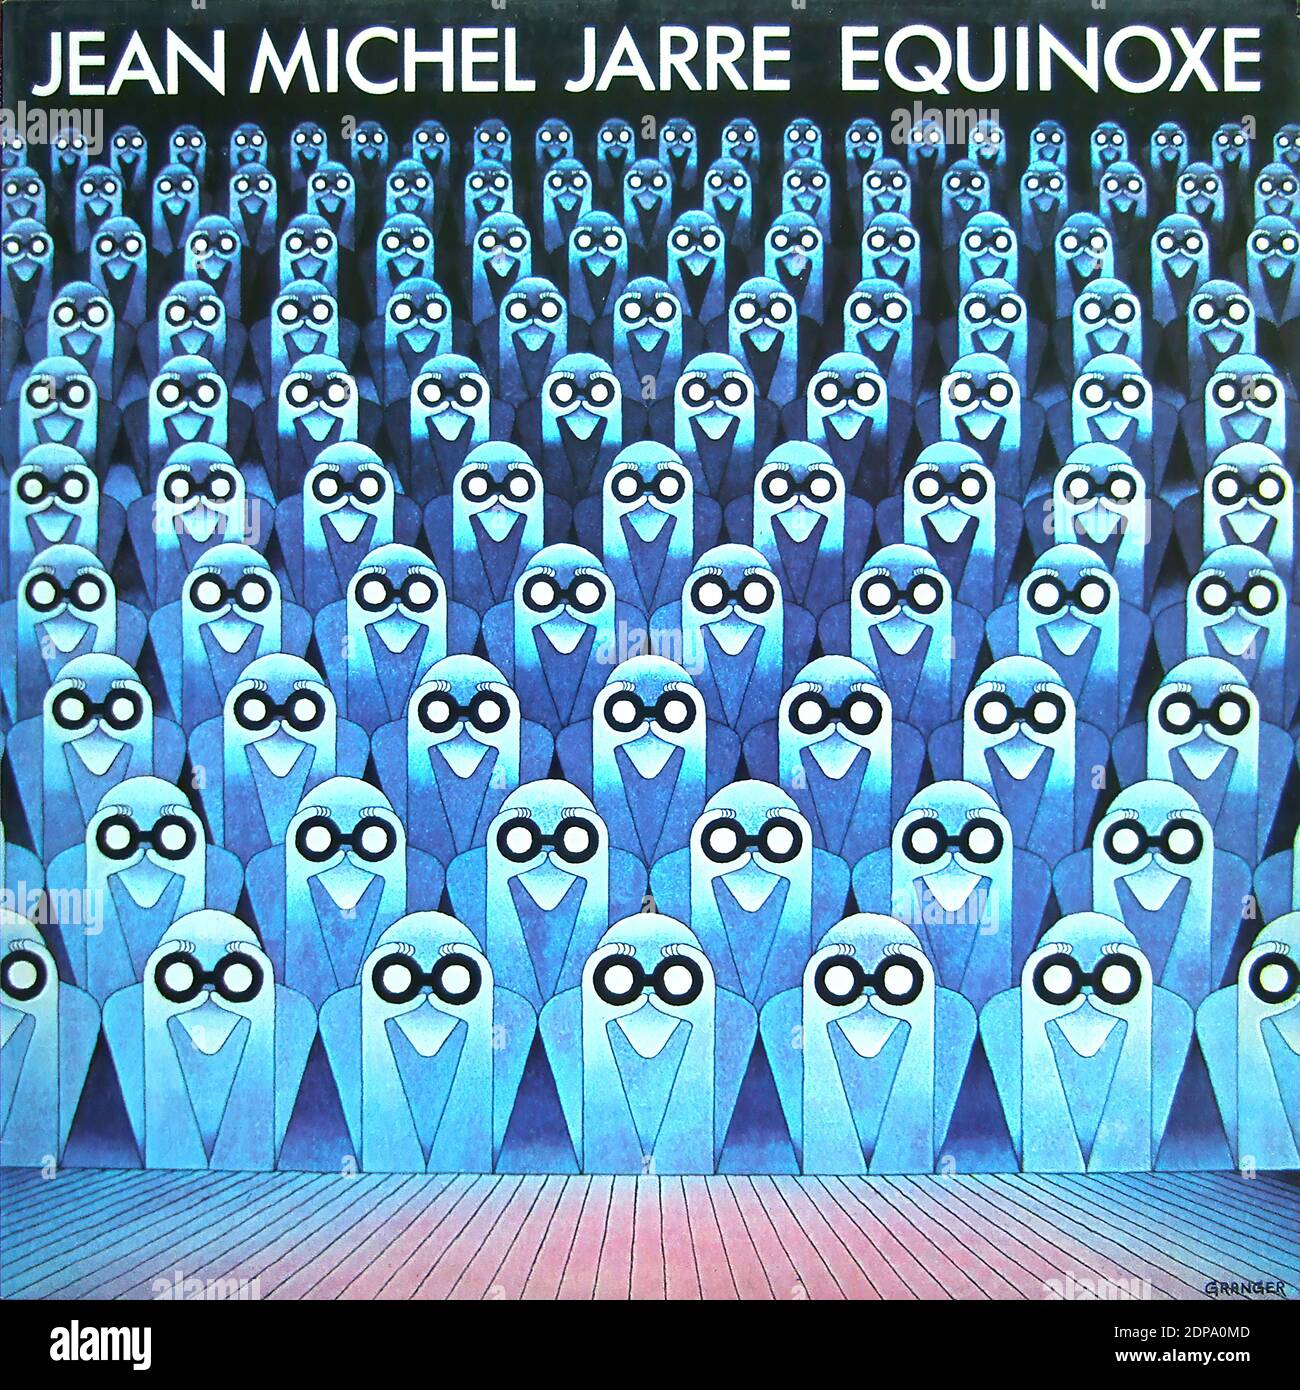 Jean-Michel Jarre - Equinoxe - Vintage vinyl album cover Stock Photo - Alamy